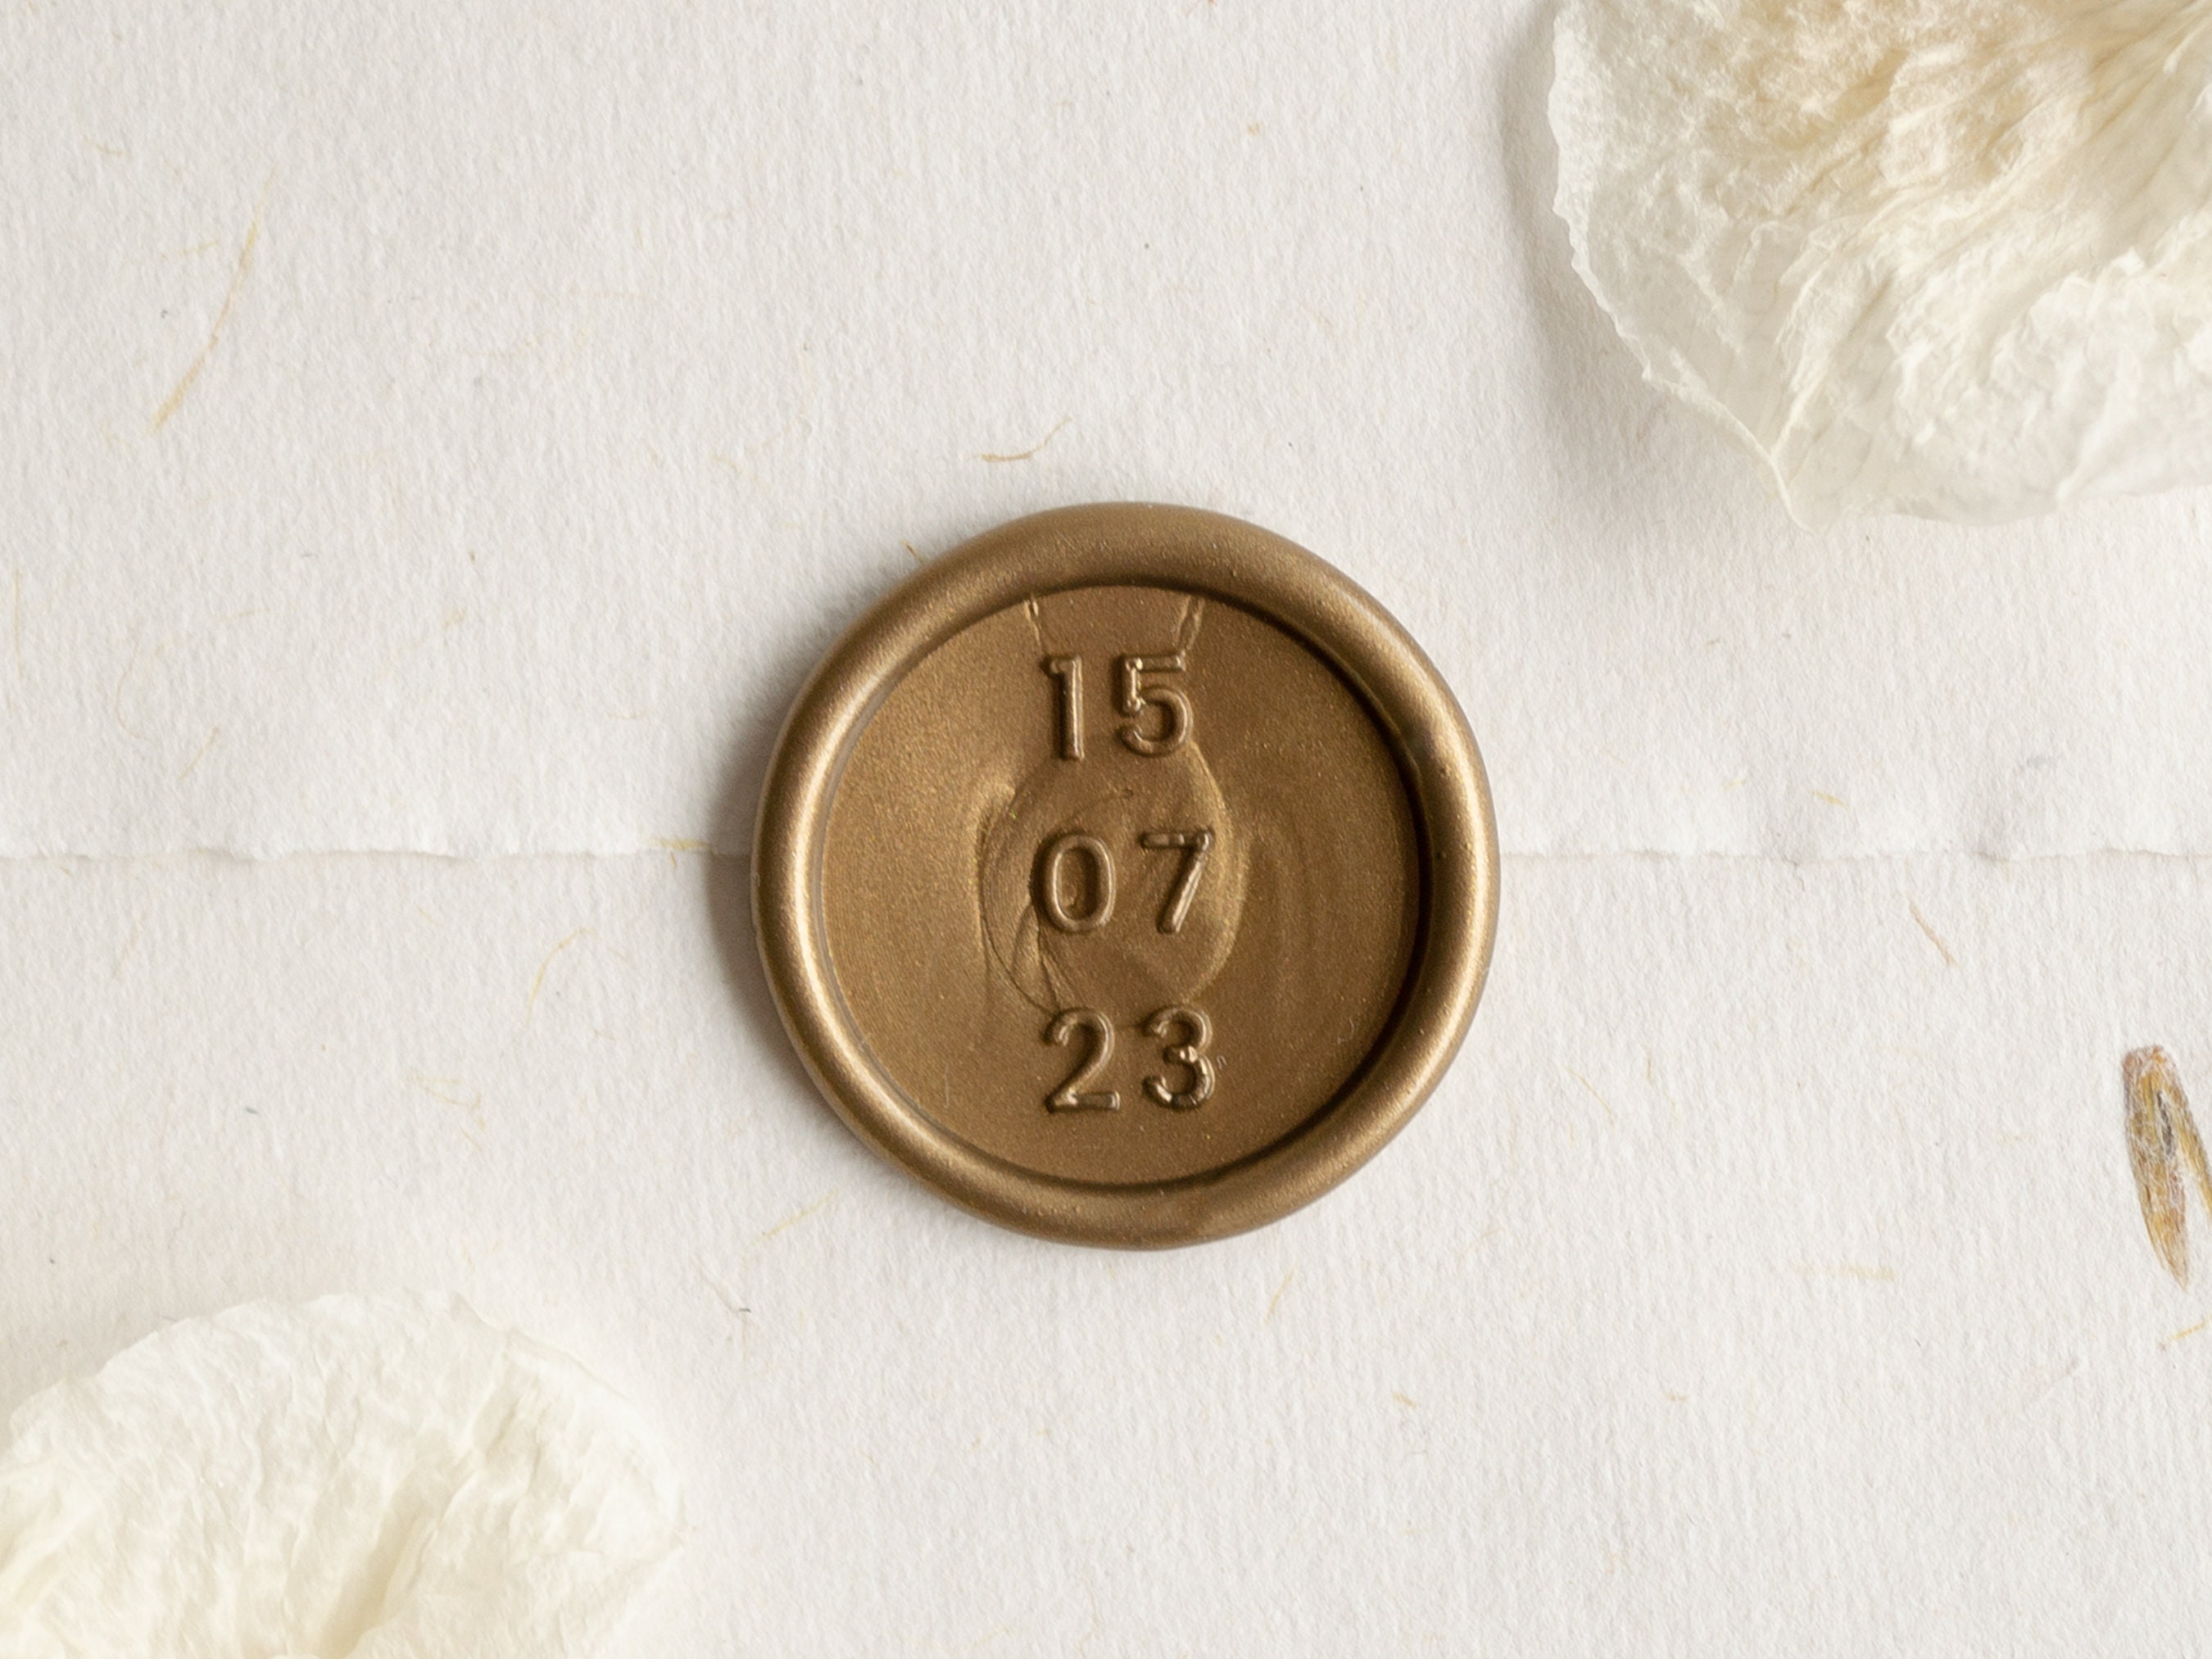 Custom Wax Seal Stamp Personalized Sealing Wax Stamp Wedding Invitation  22mm 25mm 30mm 